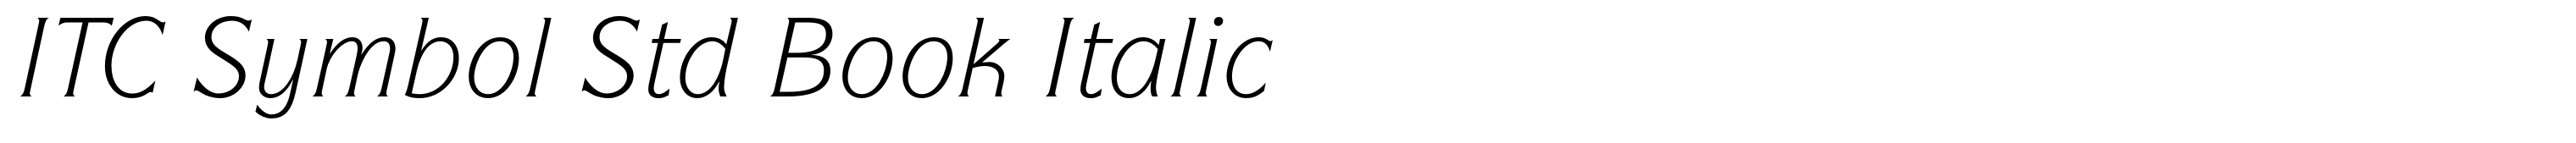 ITC Symbol Std Book Italic